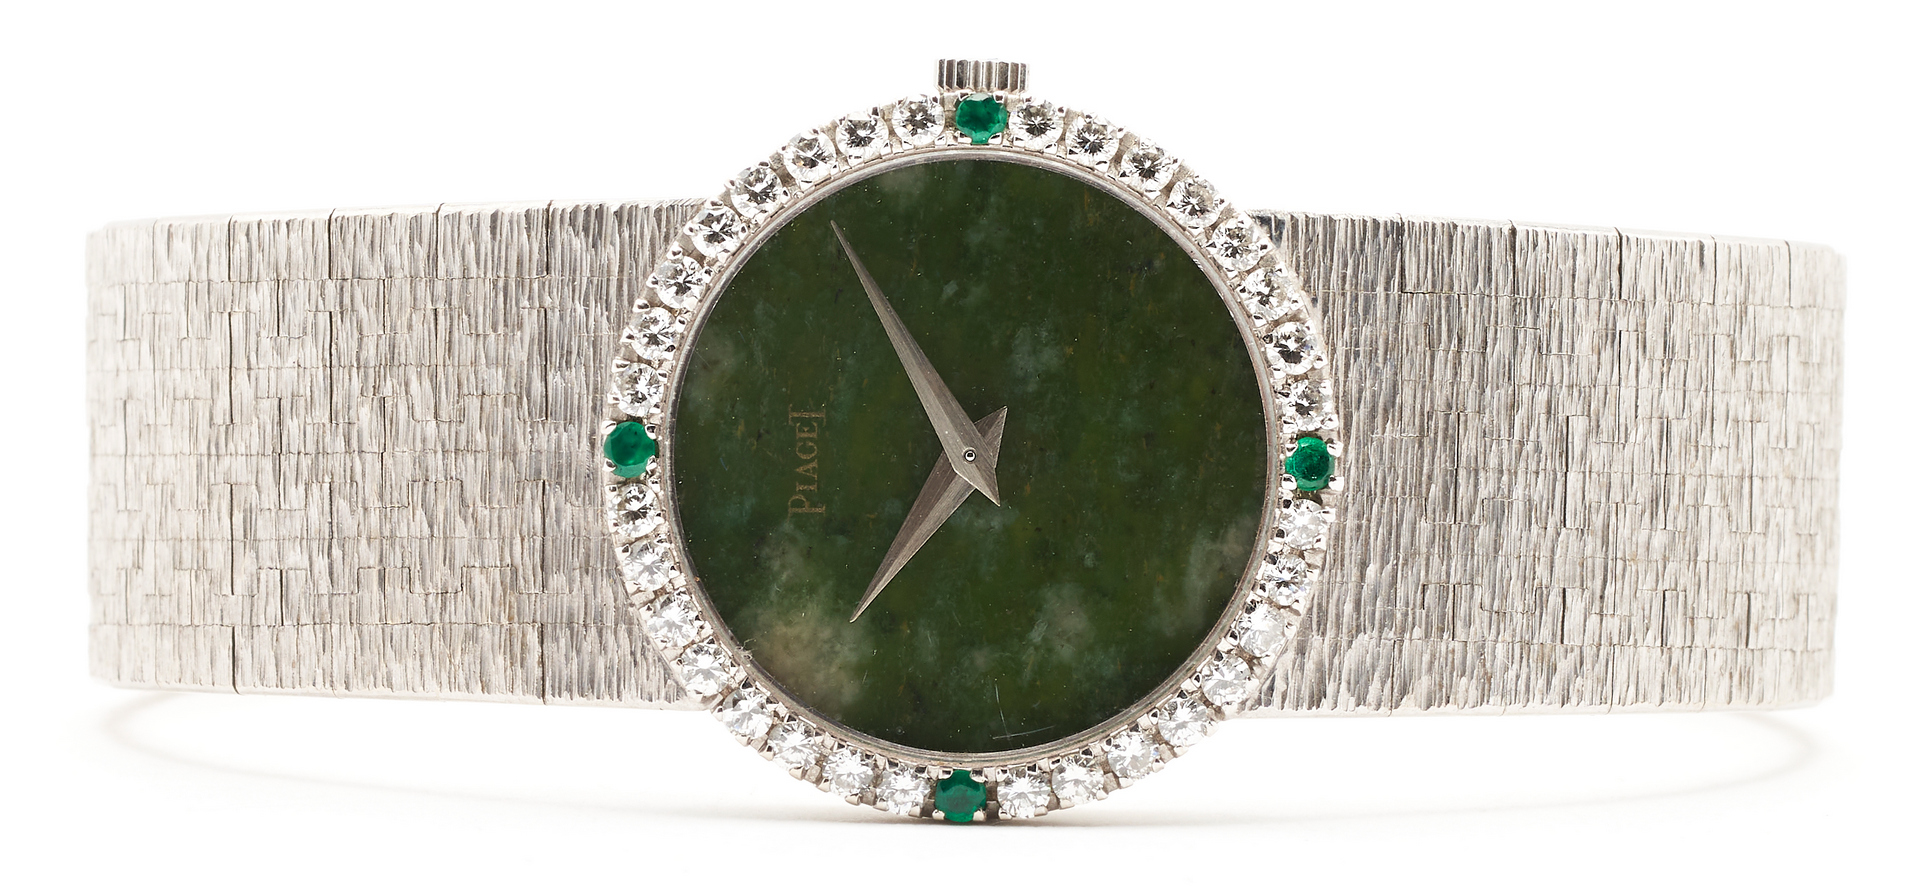 Lot 28: Ladies Piaget 18K Diamond & Emerald Watch, Jade Dial